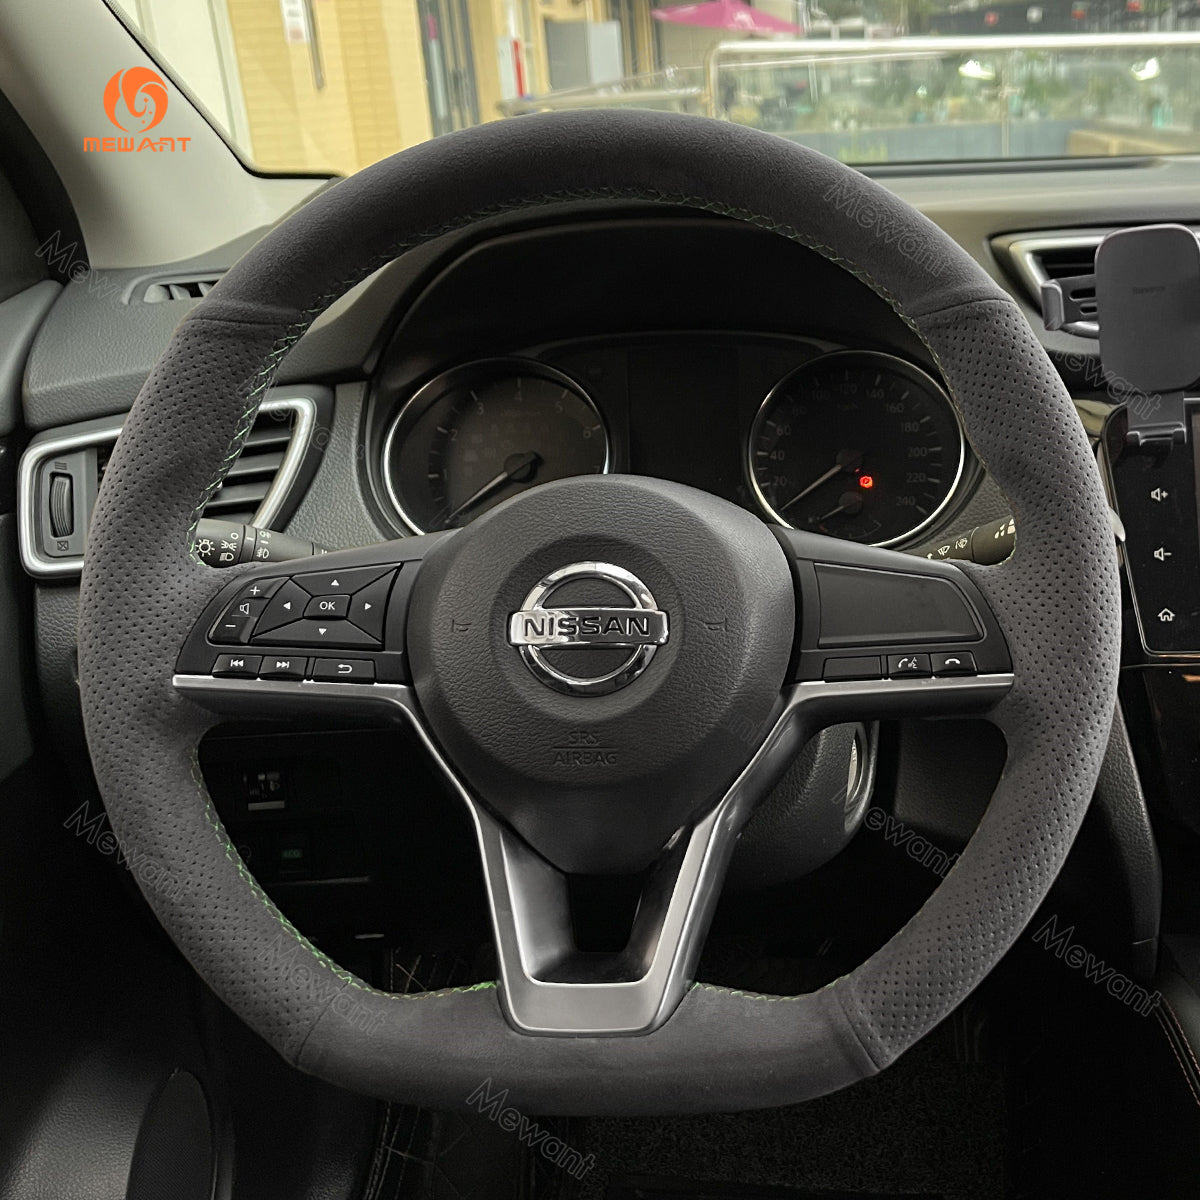 MEWANT Hand Stitch Car Steering Wheel Cover for Kia Sportage 4 2018-20 –  Mewant steering wheel cover